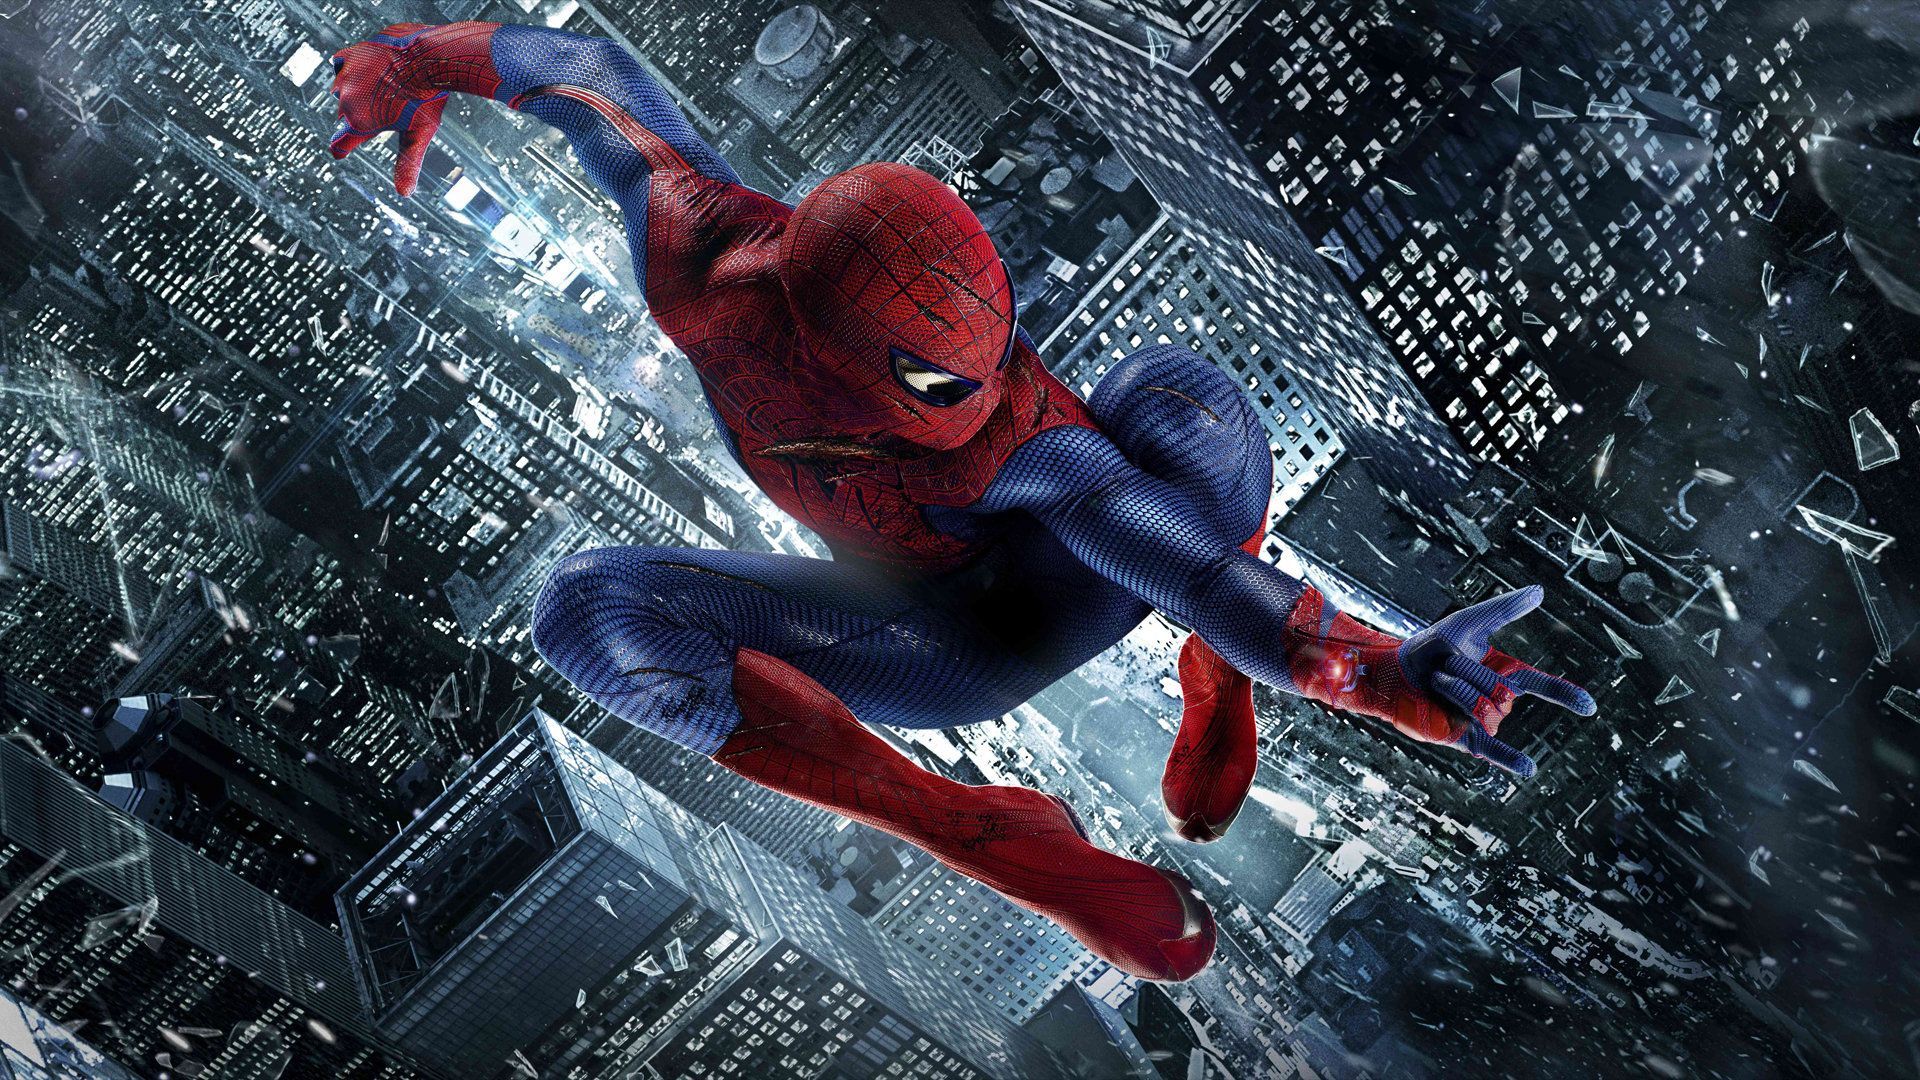 The Amazing Spiderman 2 Movie Wallpaper /the Amazing Spiderman 2 2014 Wallpaper/. Man Wallpaper, Spiderman, Amazing Spiderman